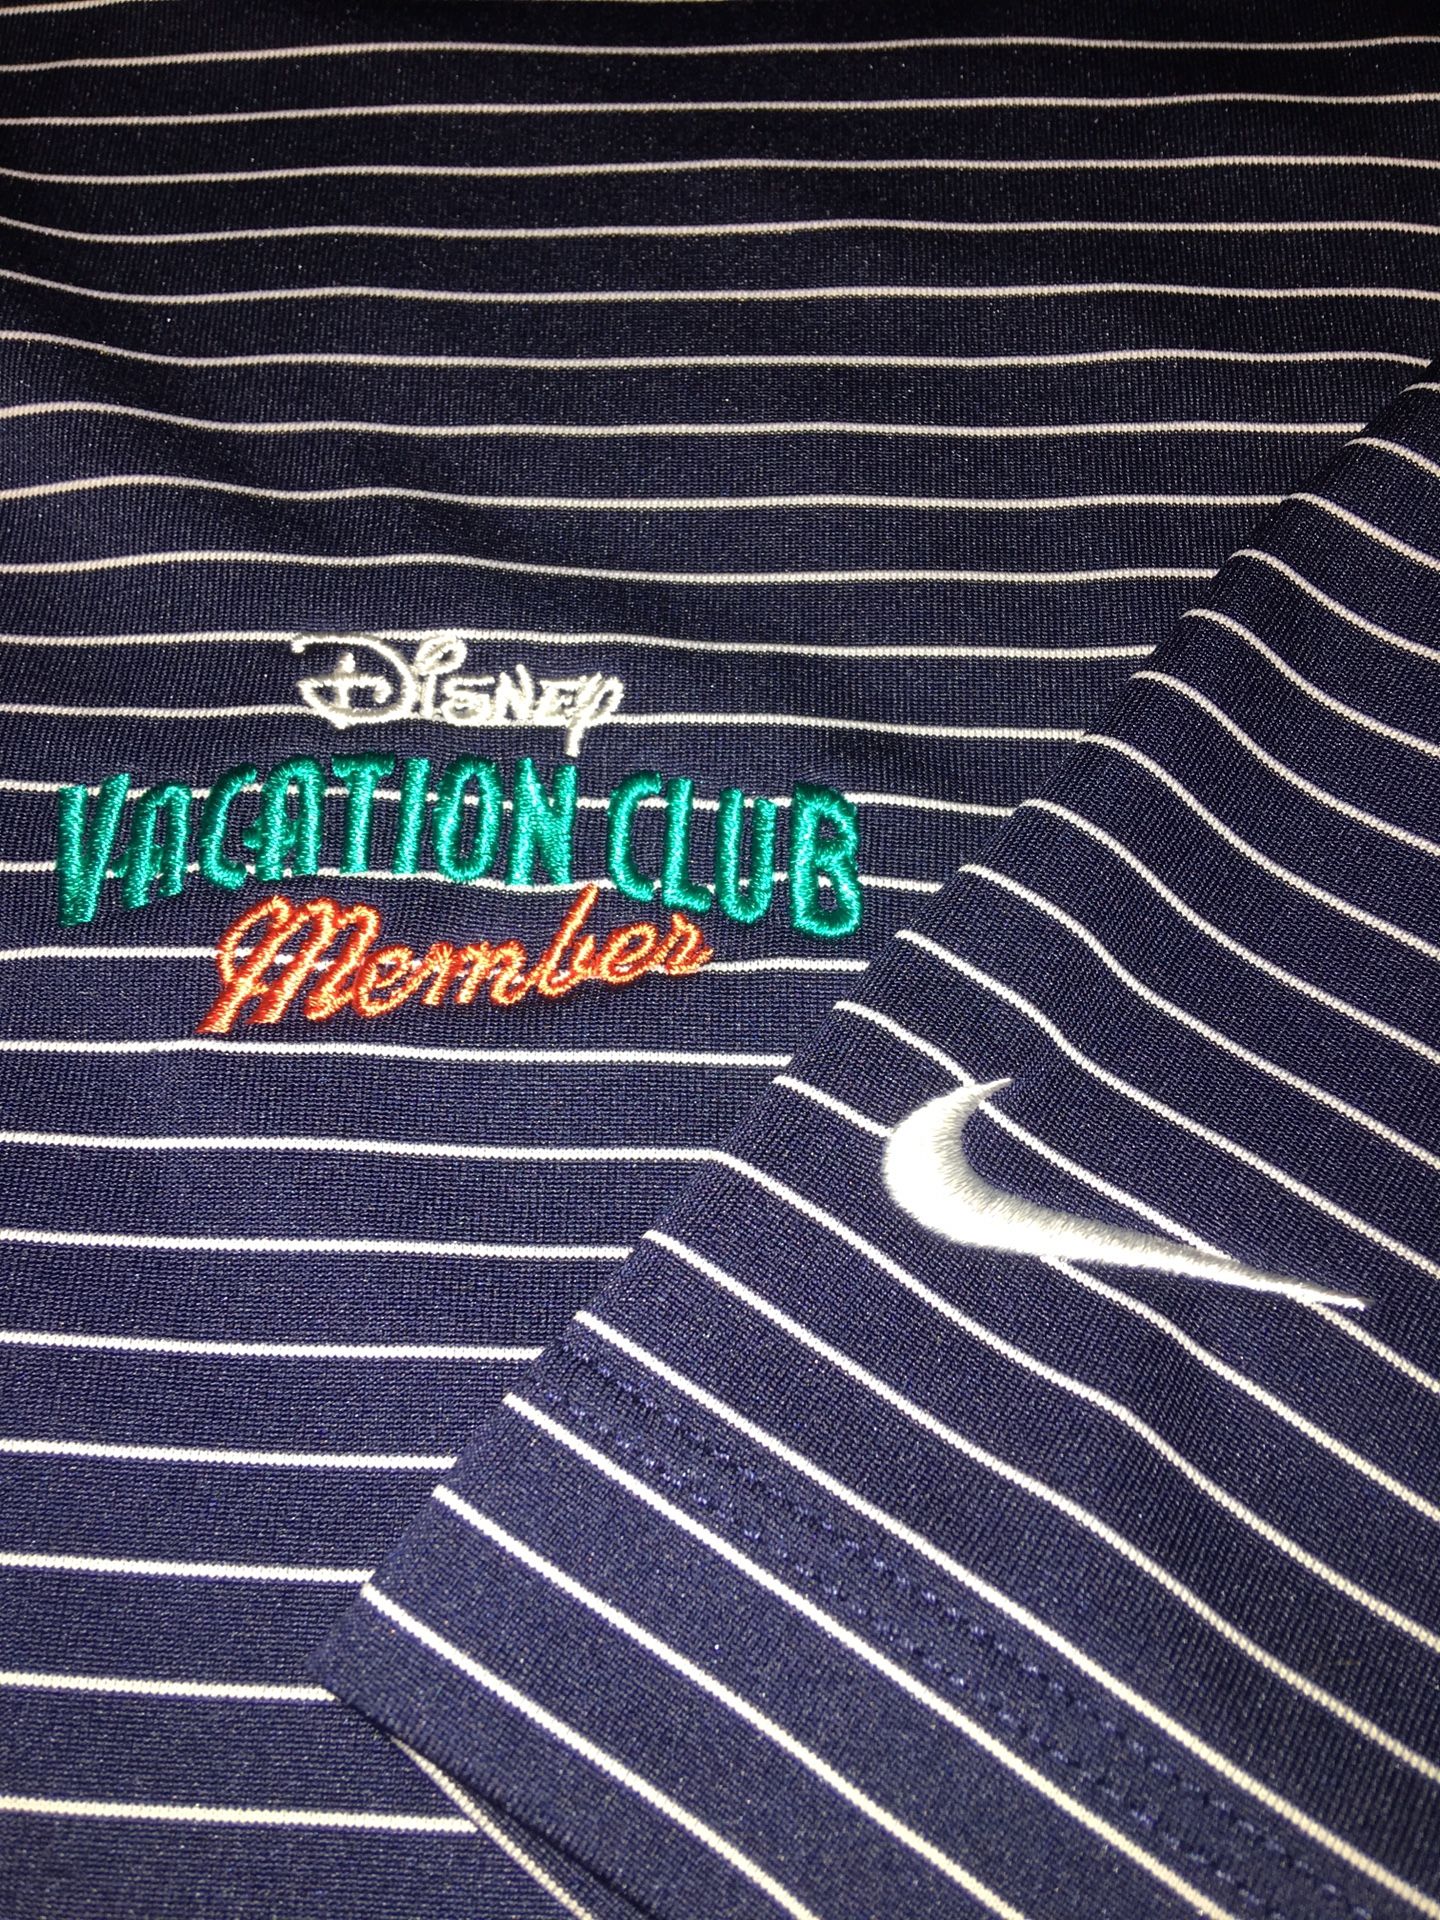 Nike Golf Shirt, Disney Vacation Club Member, Large, $10